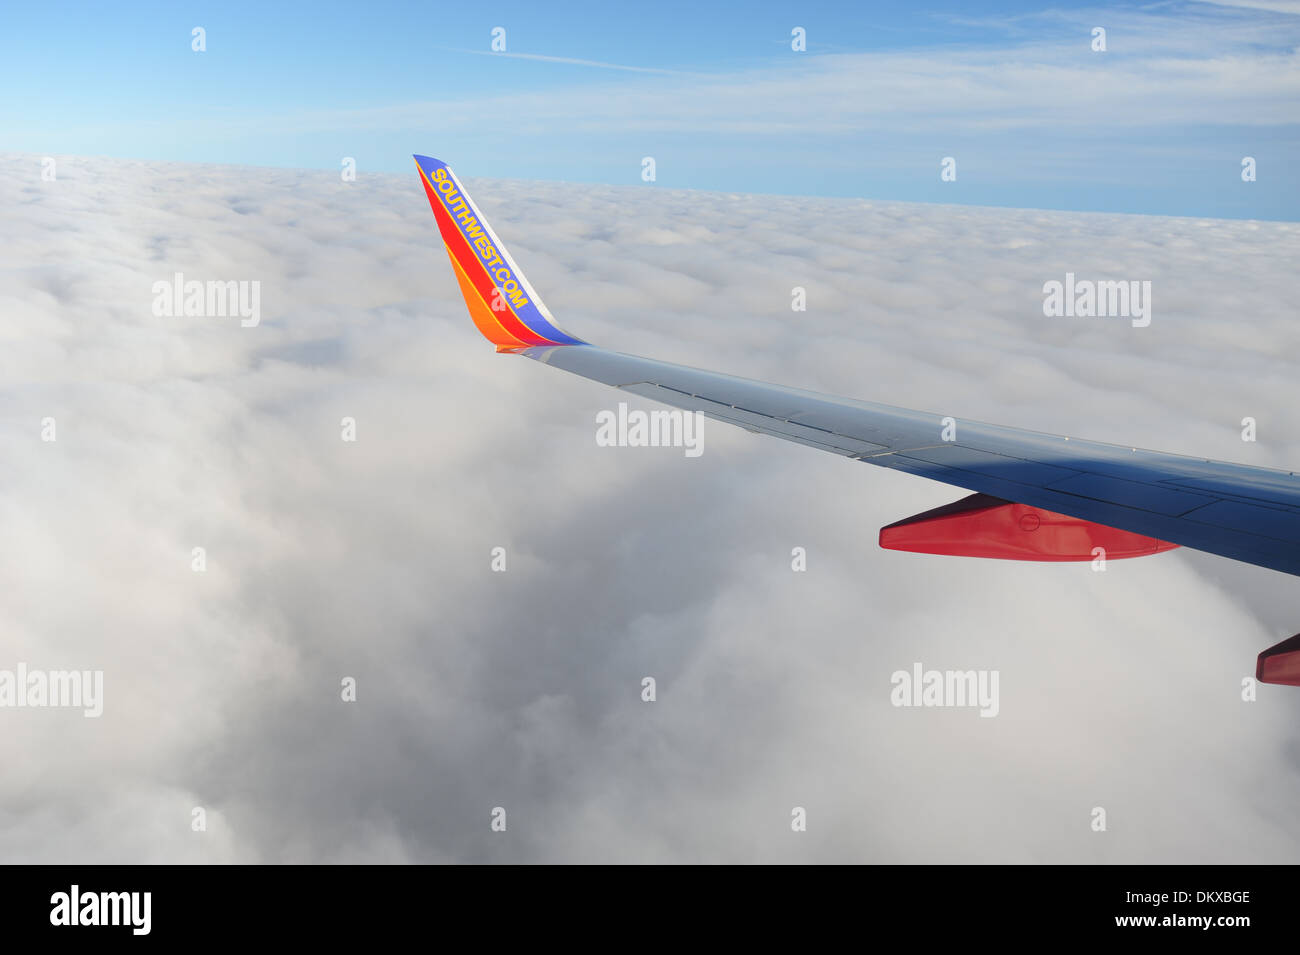 Southwest Airlines-Flügel mit Winglet am Flügel der Boeing 737-700 jet-Flugzeuge im Flug über den Wolken Stockfoto